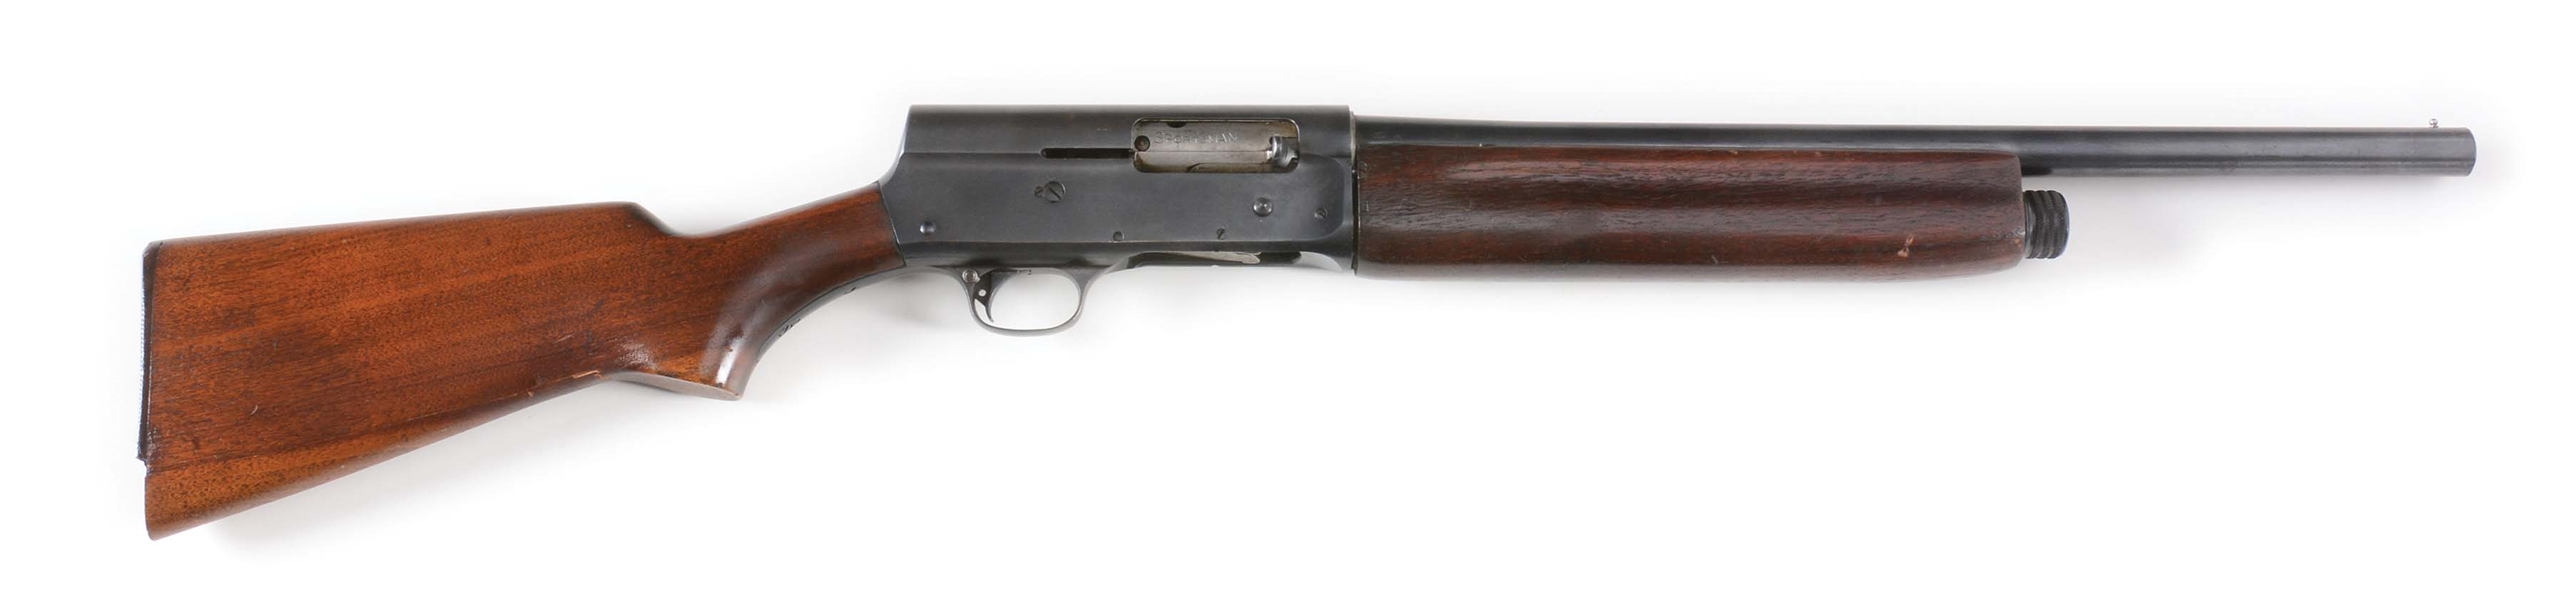 (C) WORLD WAR II REMINGTON MODEL 11 RIOT GUN.